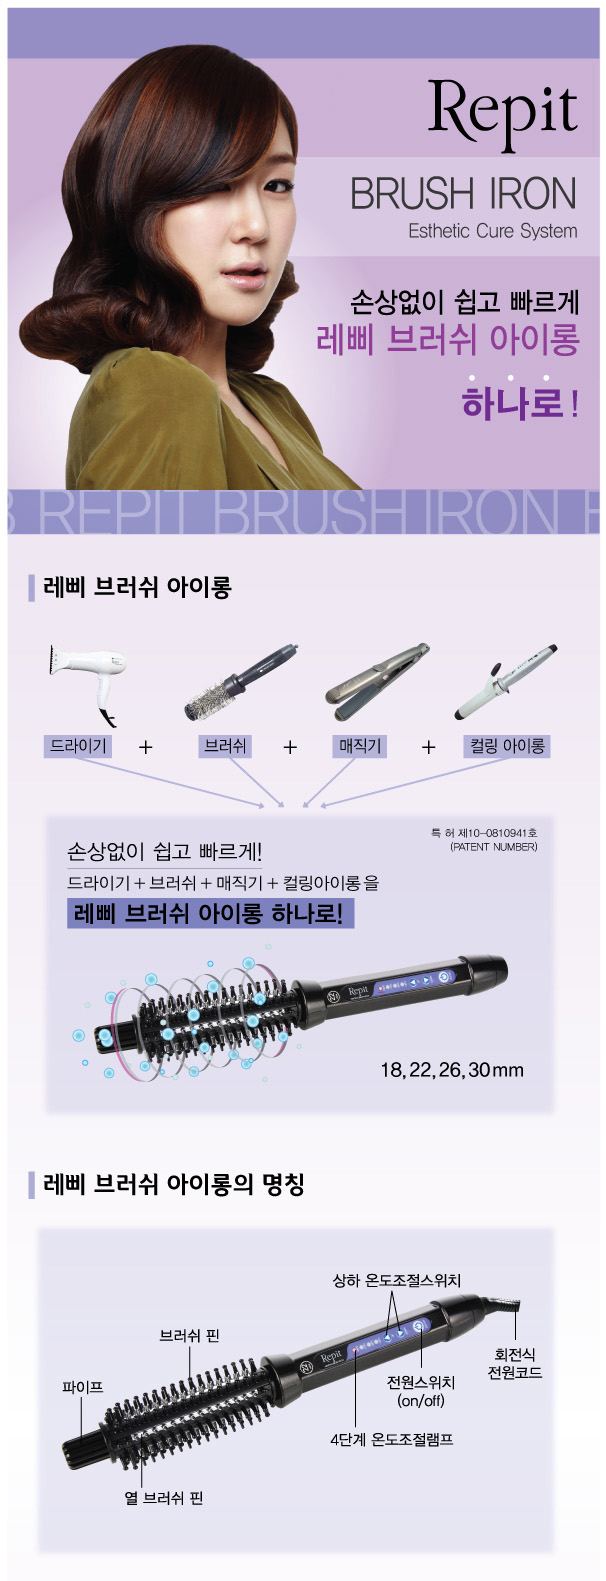 repit-brush-iron-620px1.jpeg